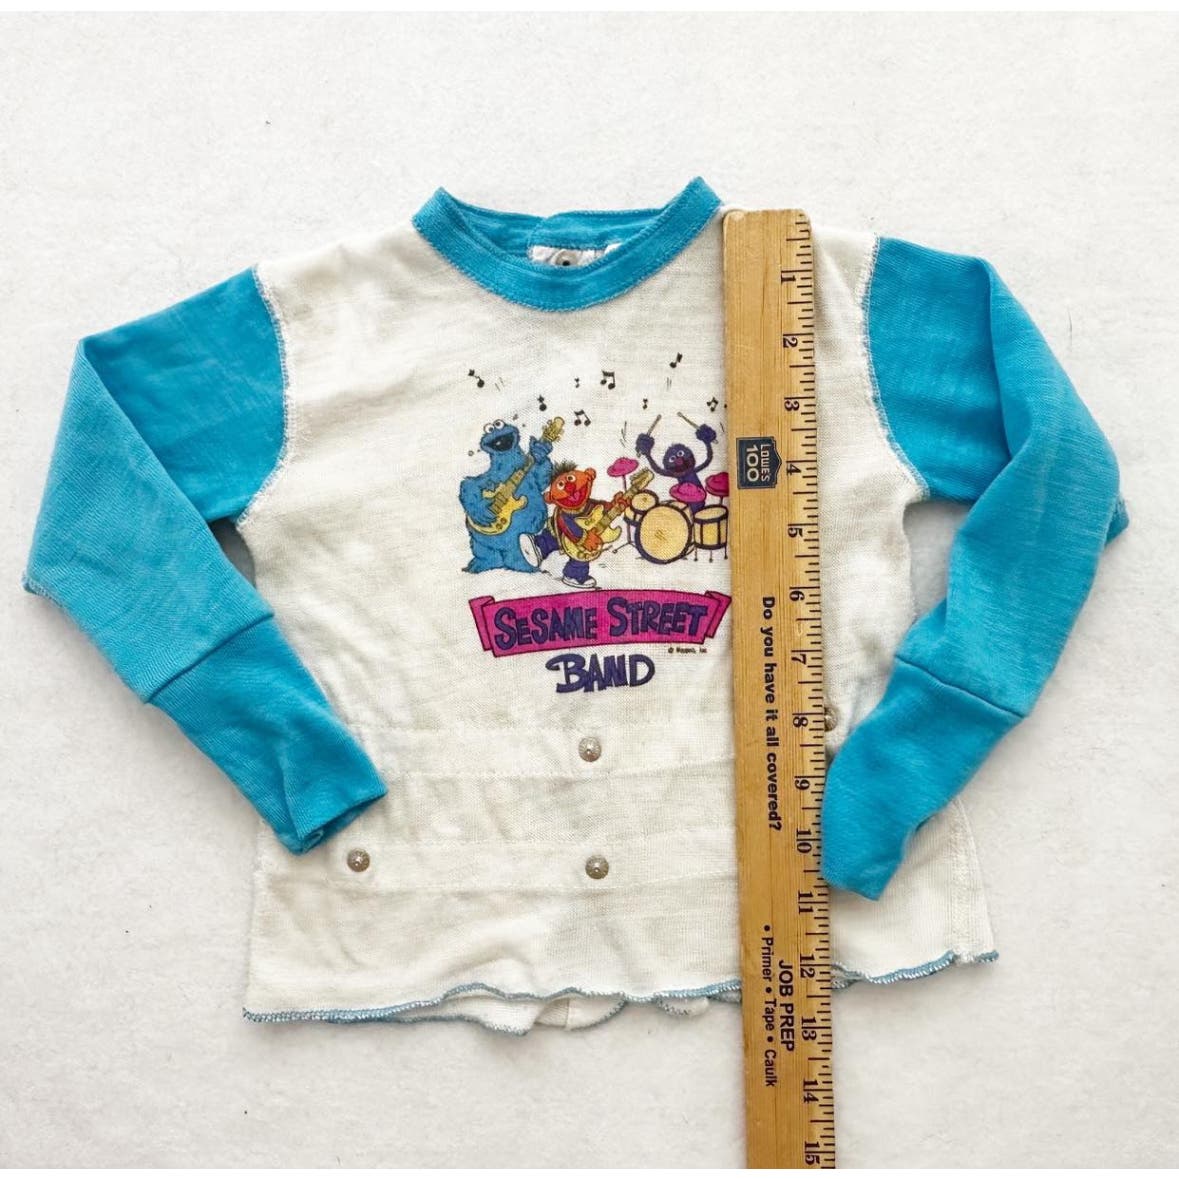 Vintage Toddletime Sesame Street Pajama Top: 2T?